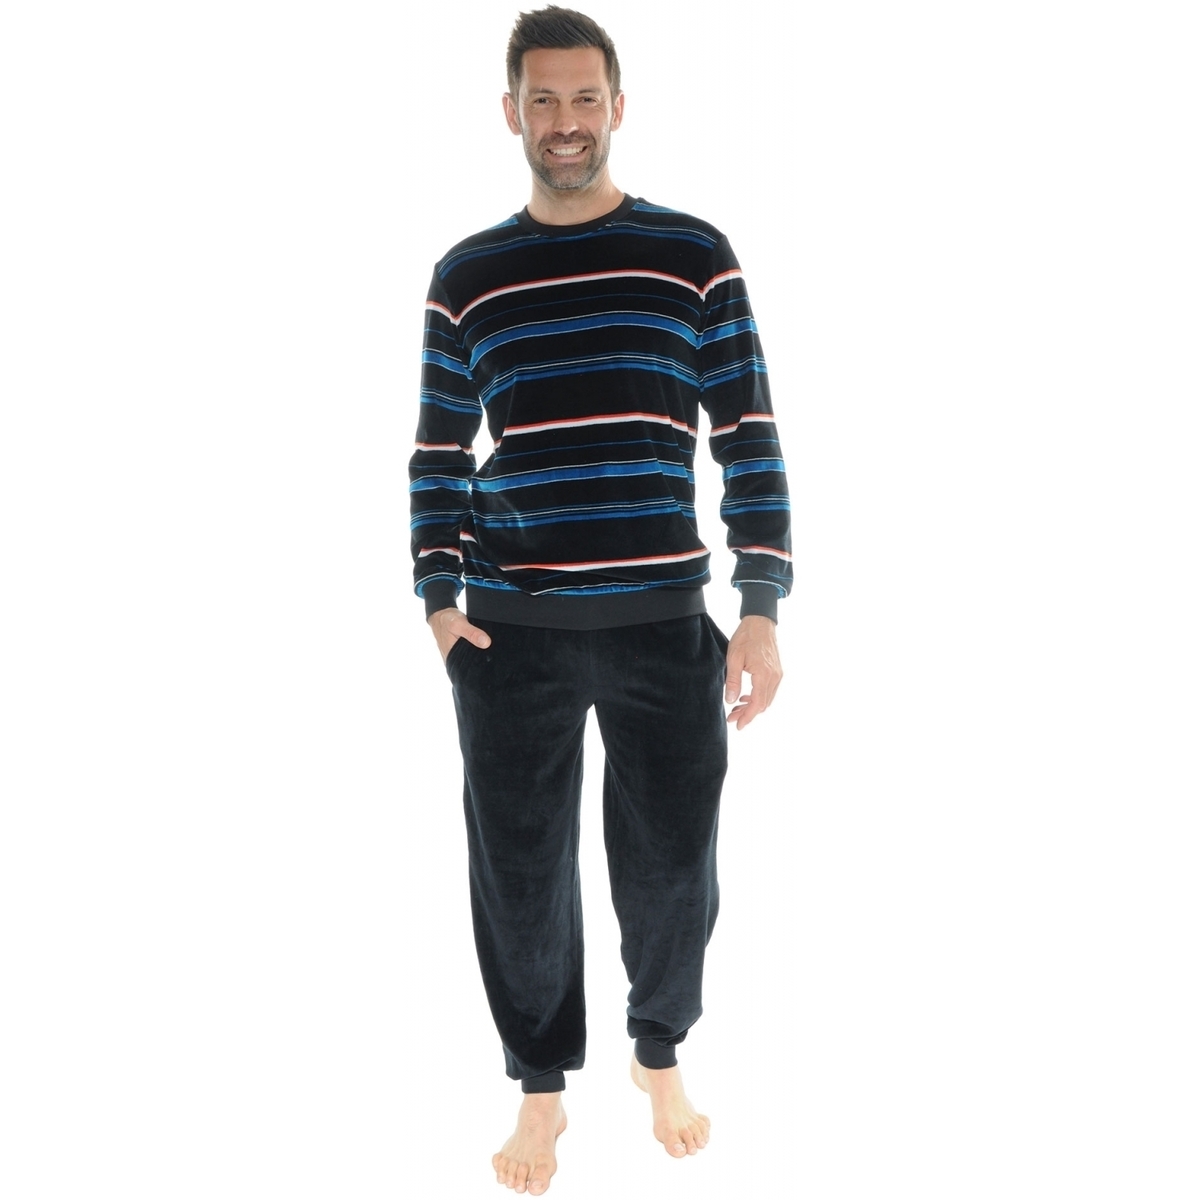 Textiel Heren Pyjama's / nachthemden Christian Cane IDELBERT Zwart